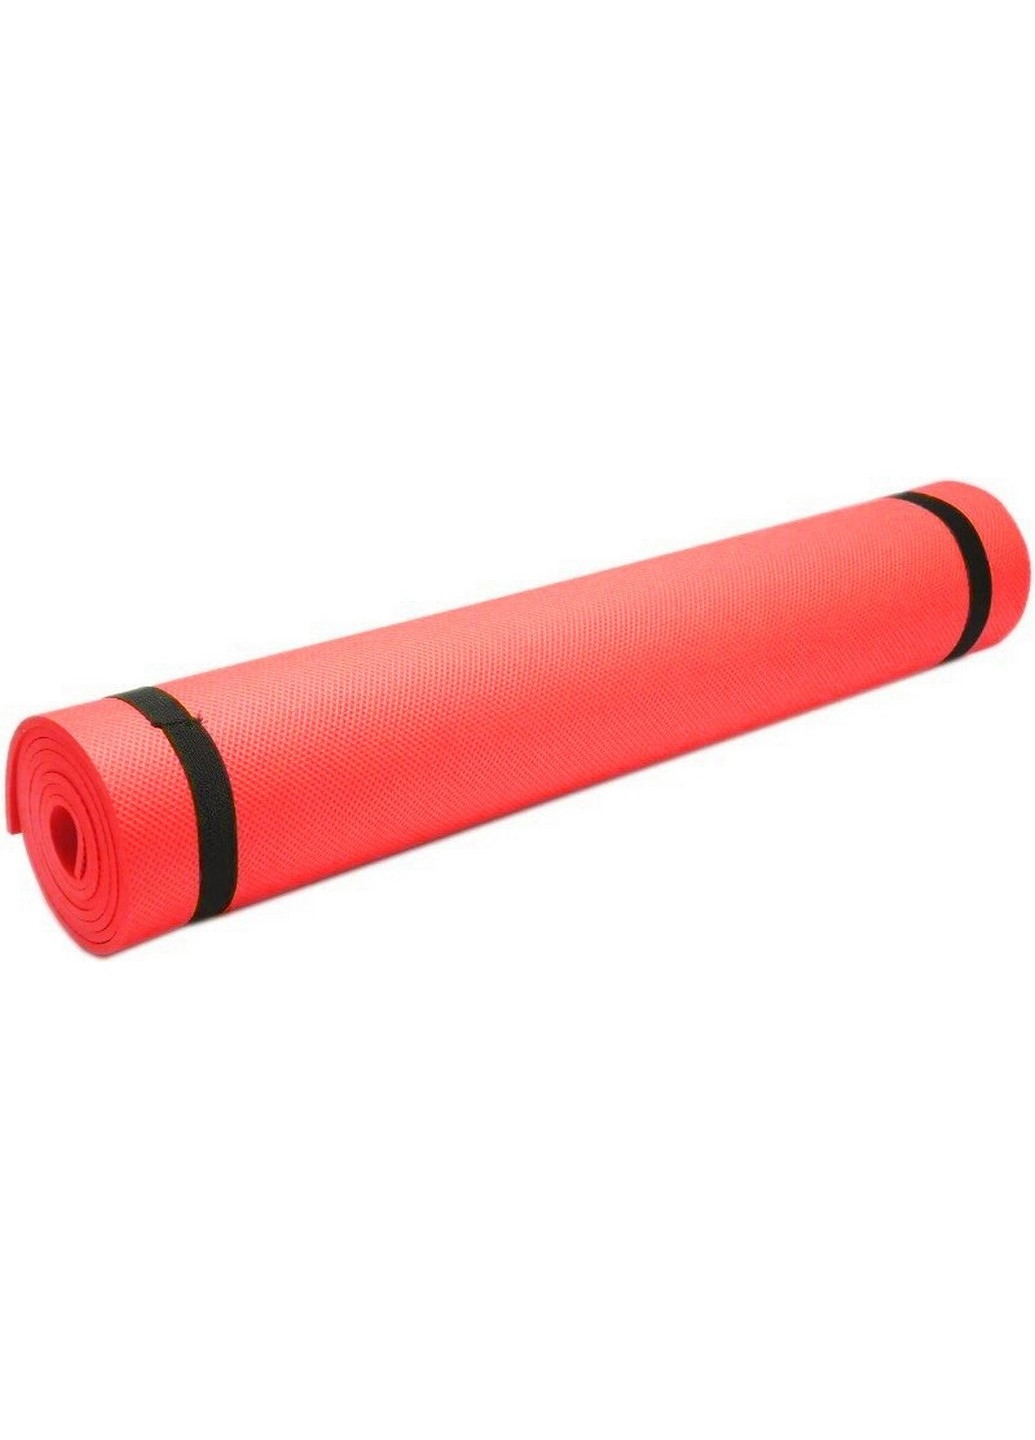 Йогамат M 0380-2 73х61 см, толщина 5 мм (Красный) Profi (237823438)